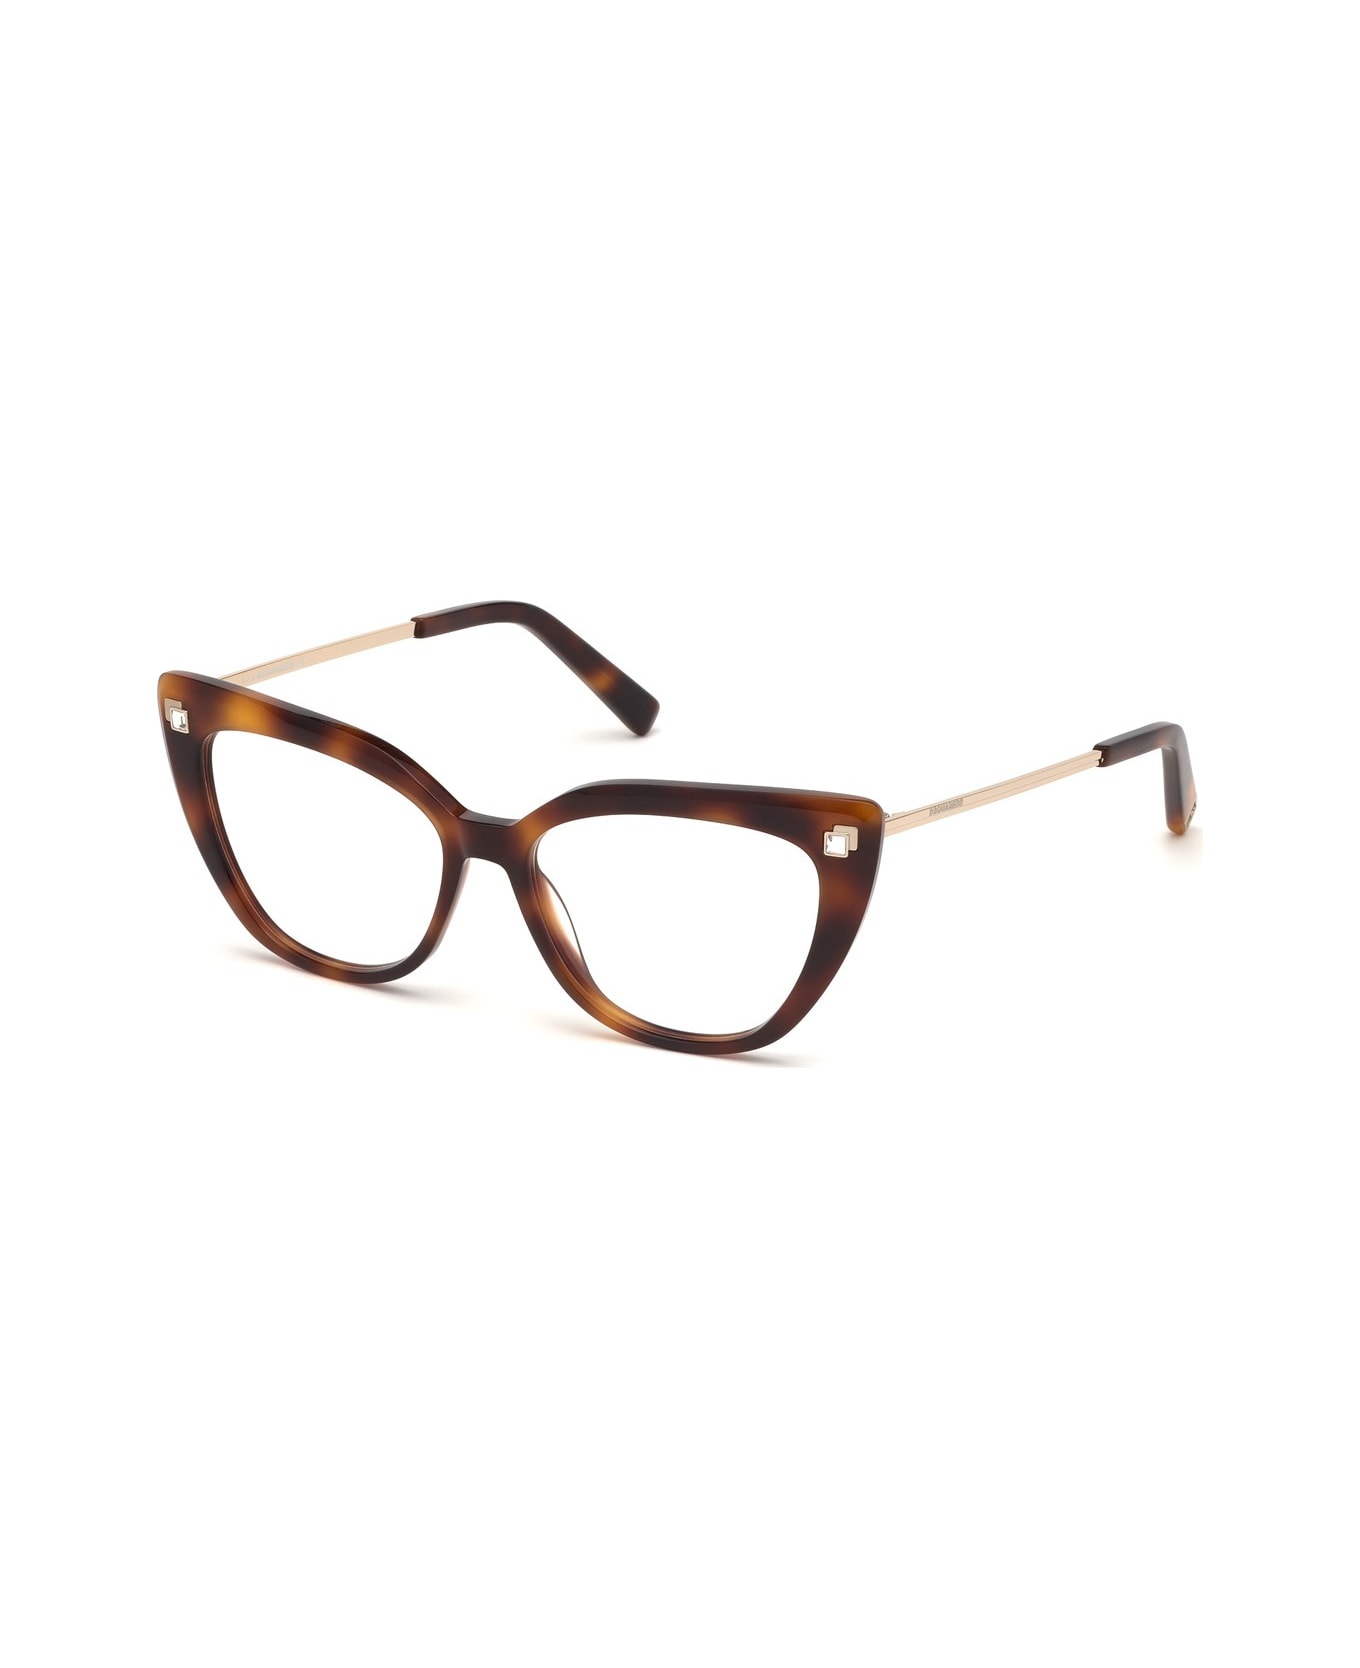 Dsquared2 Eyewear Dq5289 Glasses - Marrone アイウェア